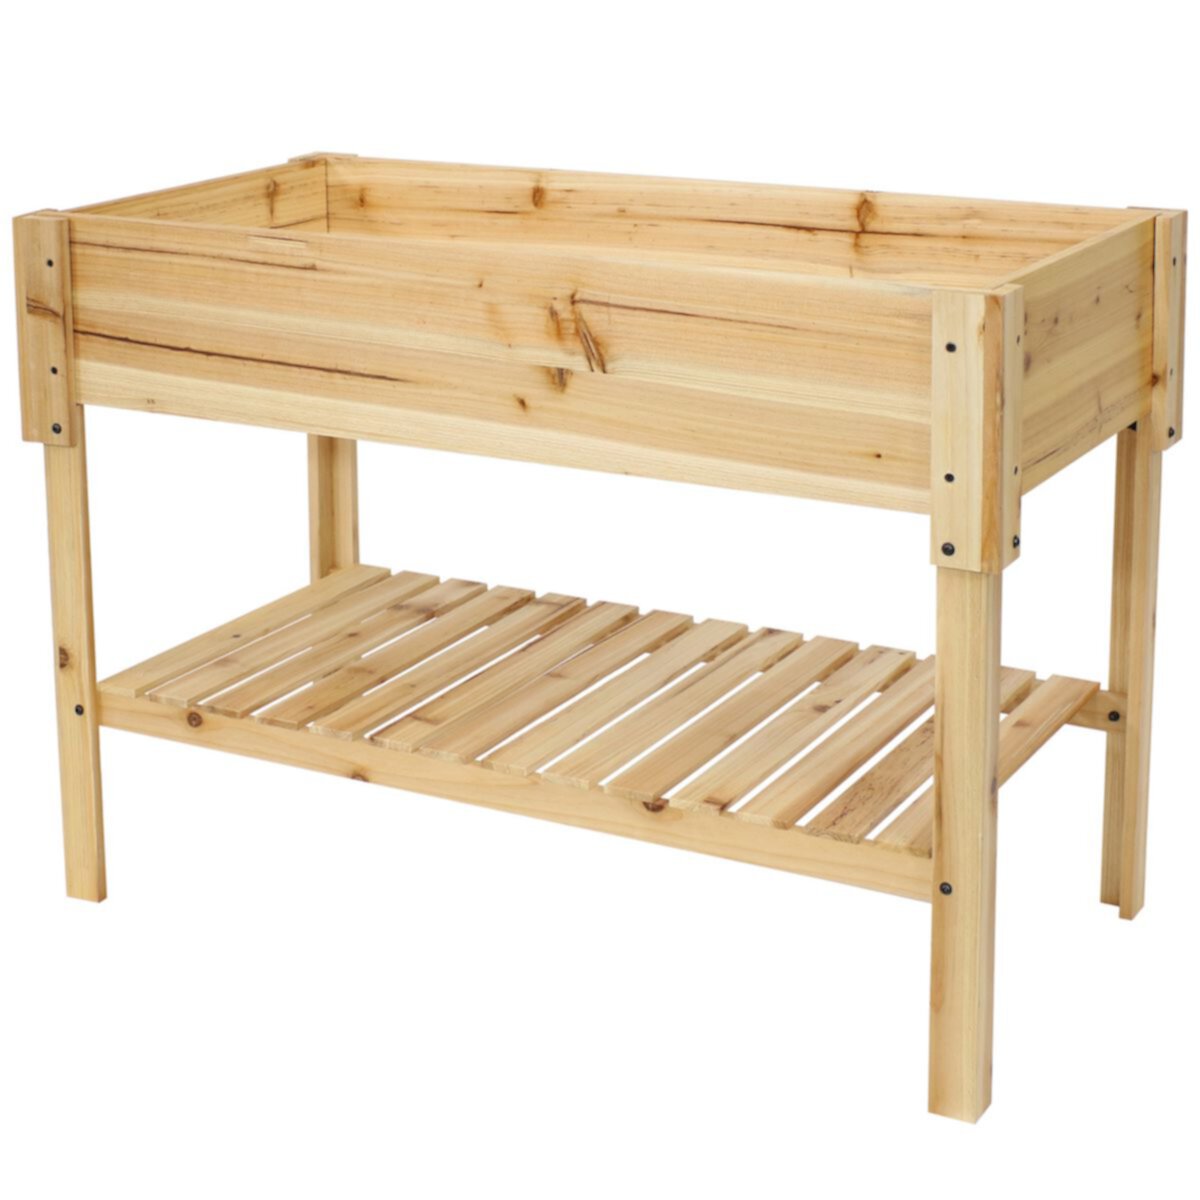 Sunnydaze Wooden Raised Garden Bed Planter Box with Shelf - 42 in Sunnydaze Decor